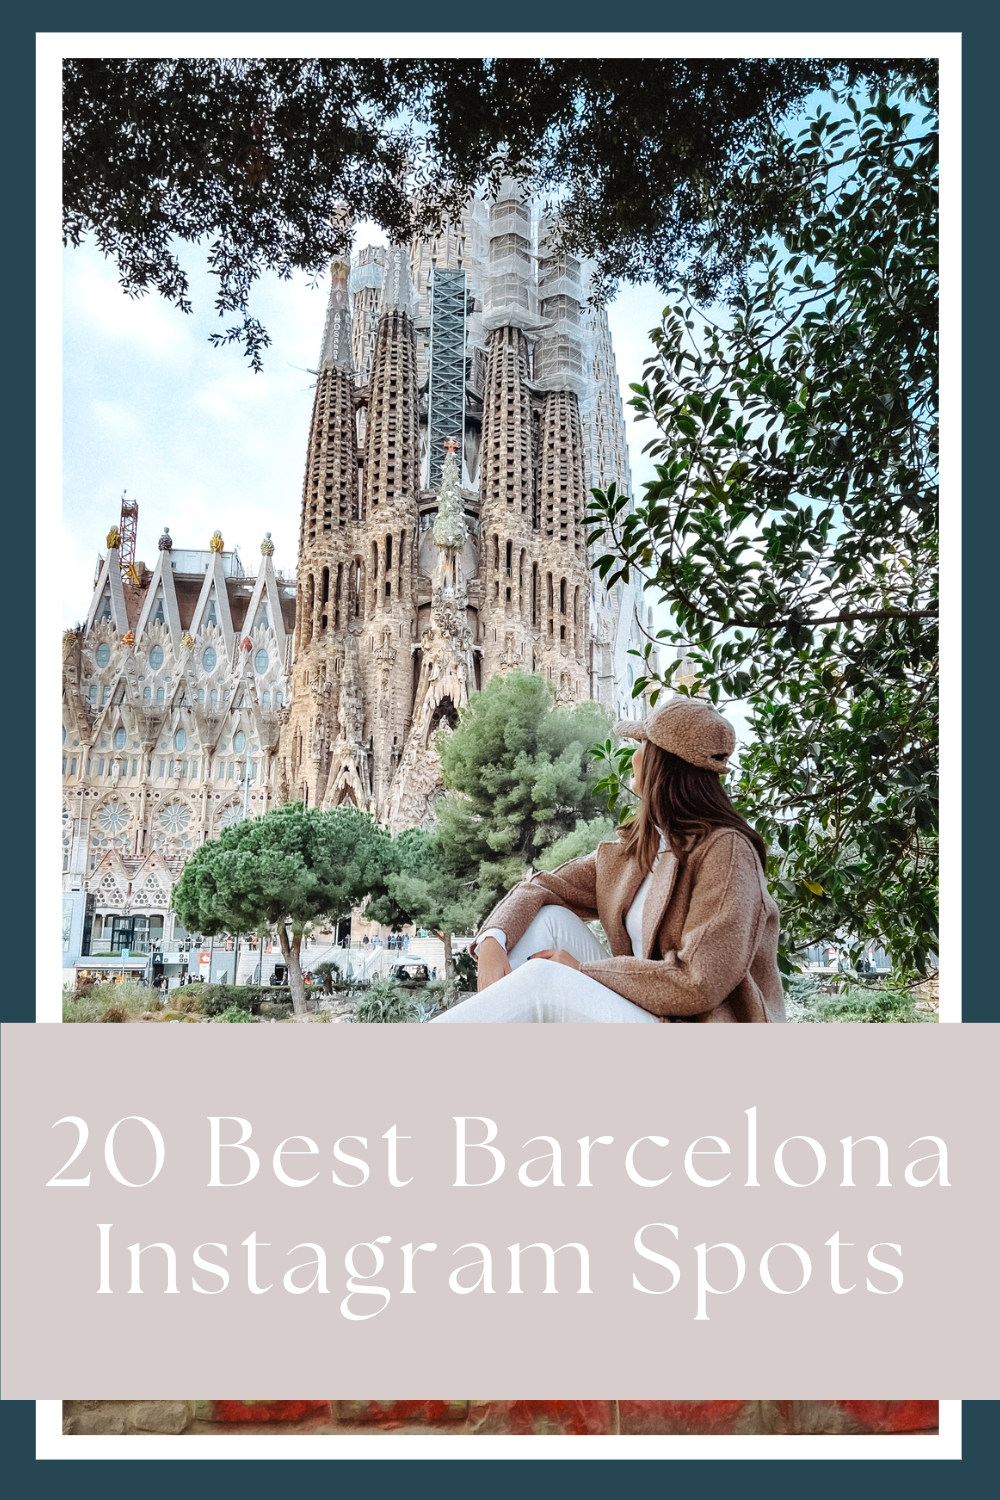 Best Barcelona Instagram spots